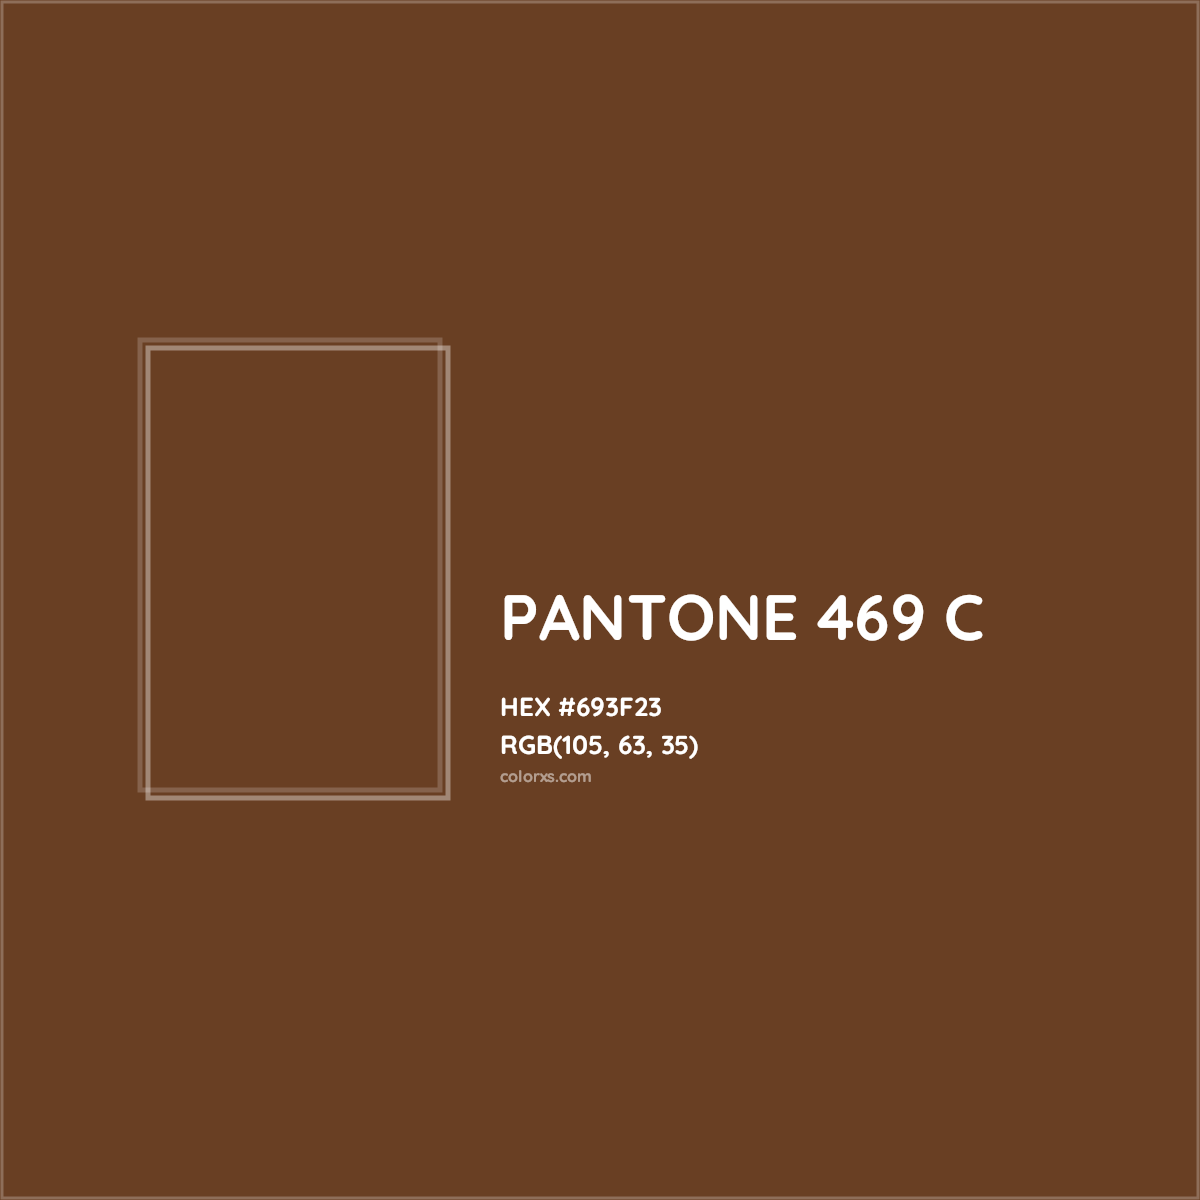 HEX #693F23 PANTONE 469 C CMS Pantone PMS - Color Code